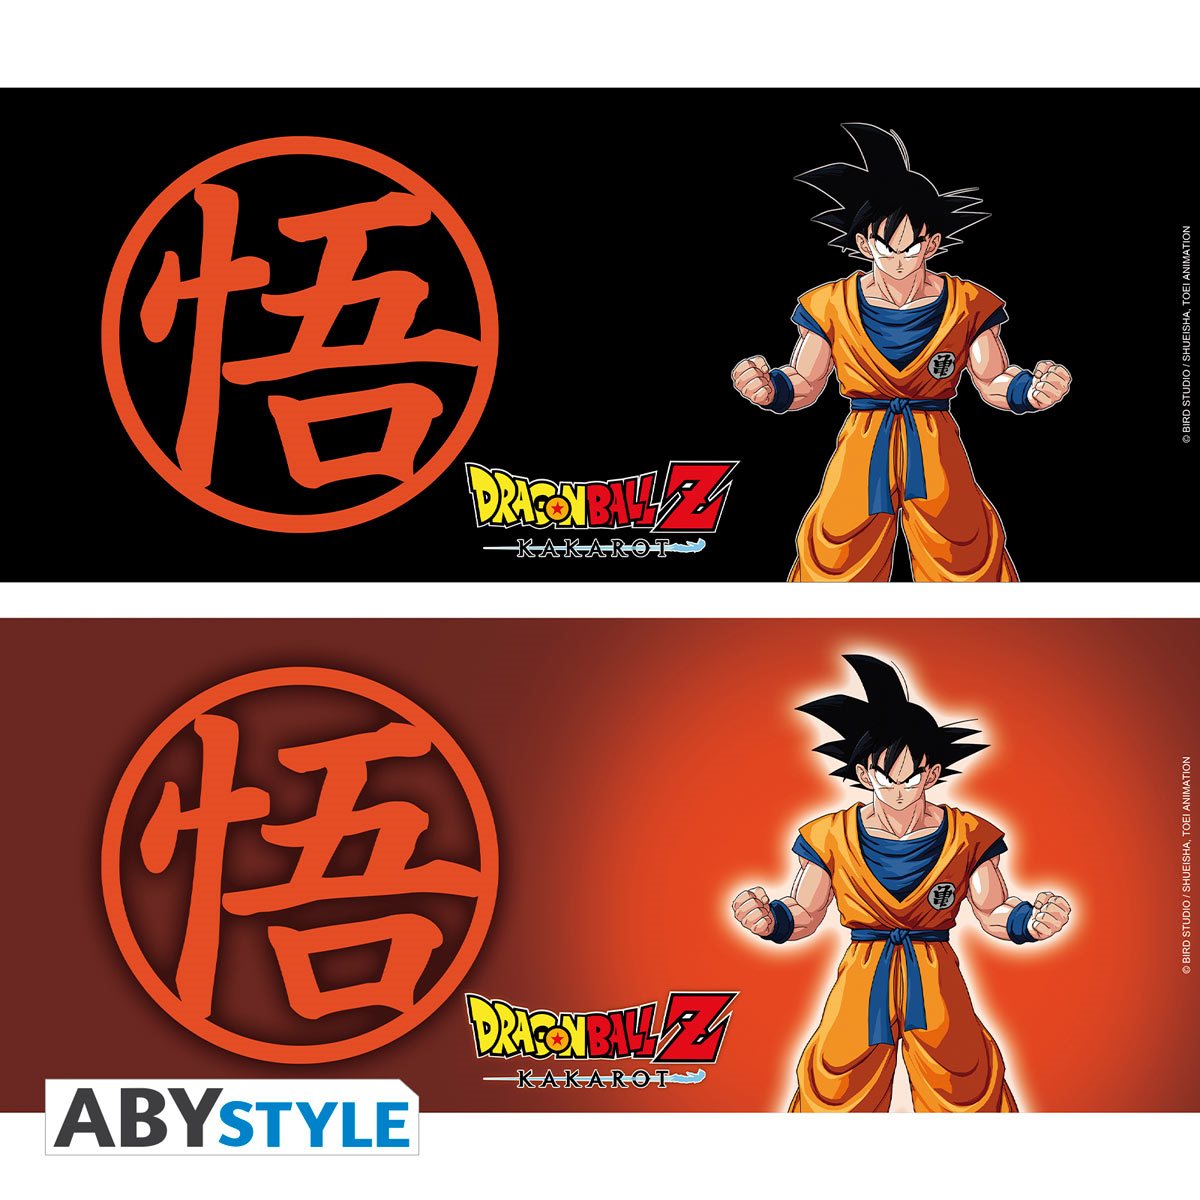 ABYStyle Taza Termocromatica: Dragon Ball Z Kakarot - Goku 320 ml